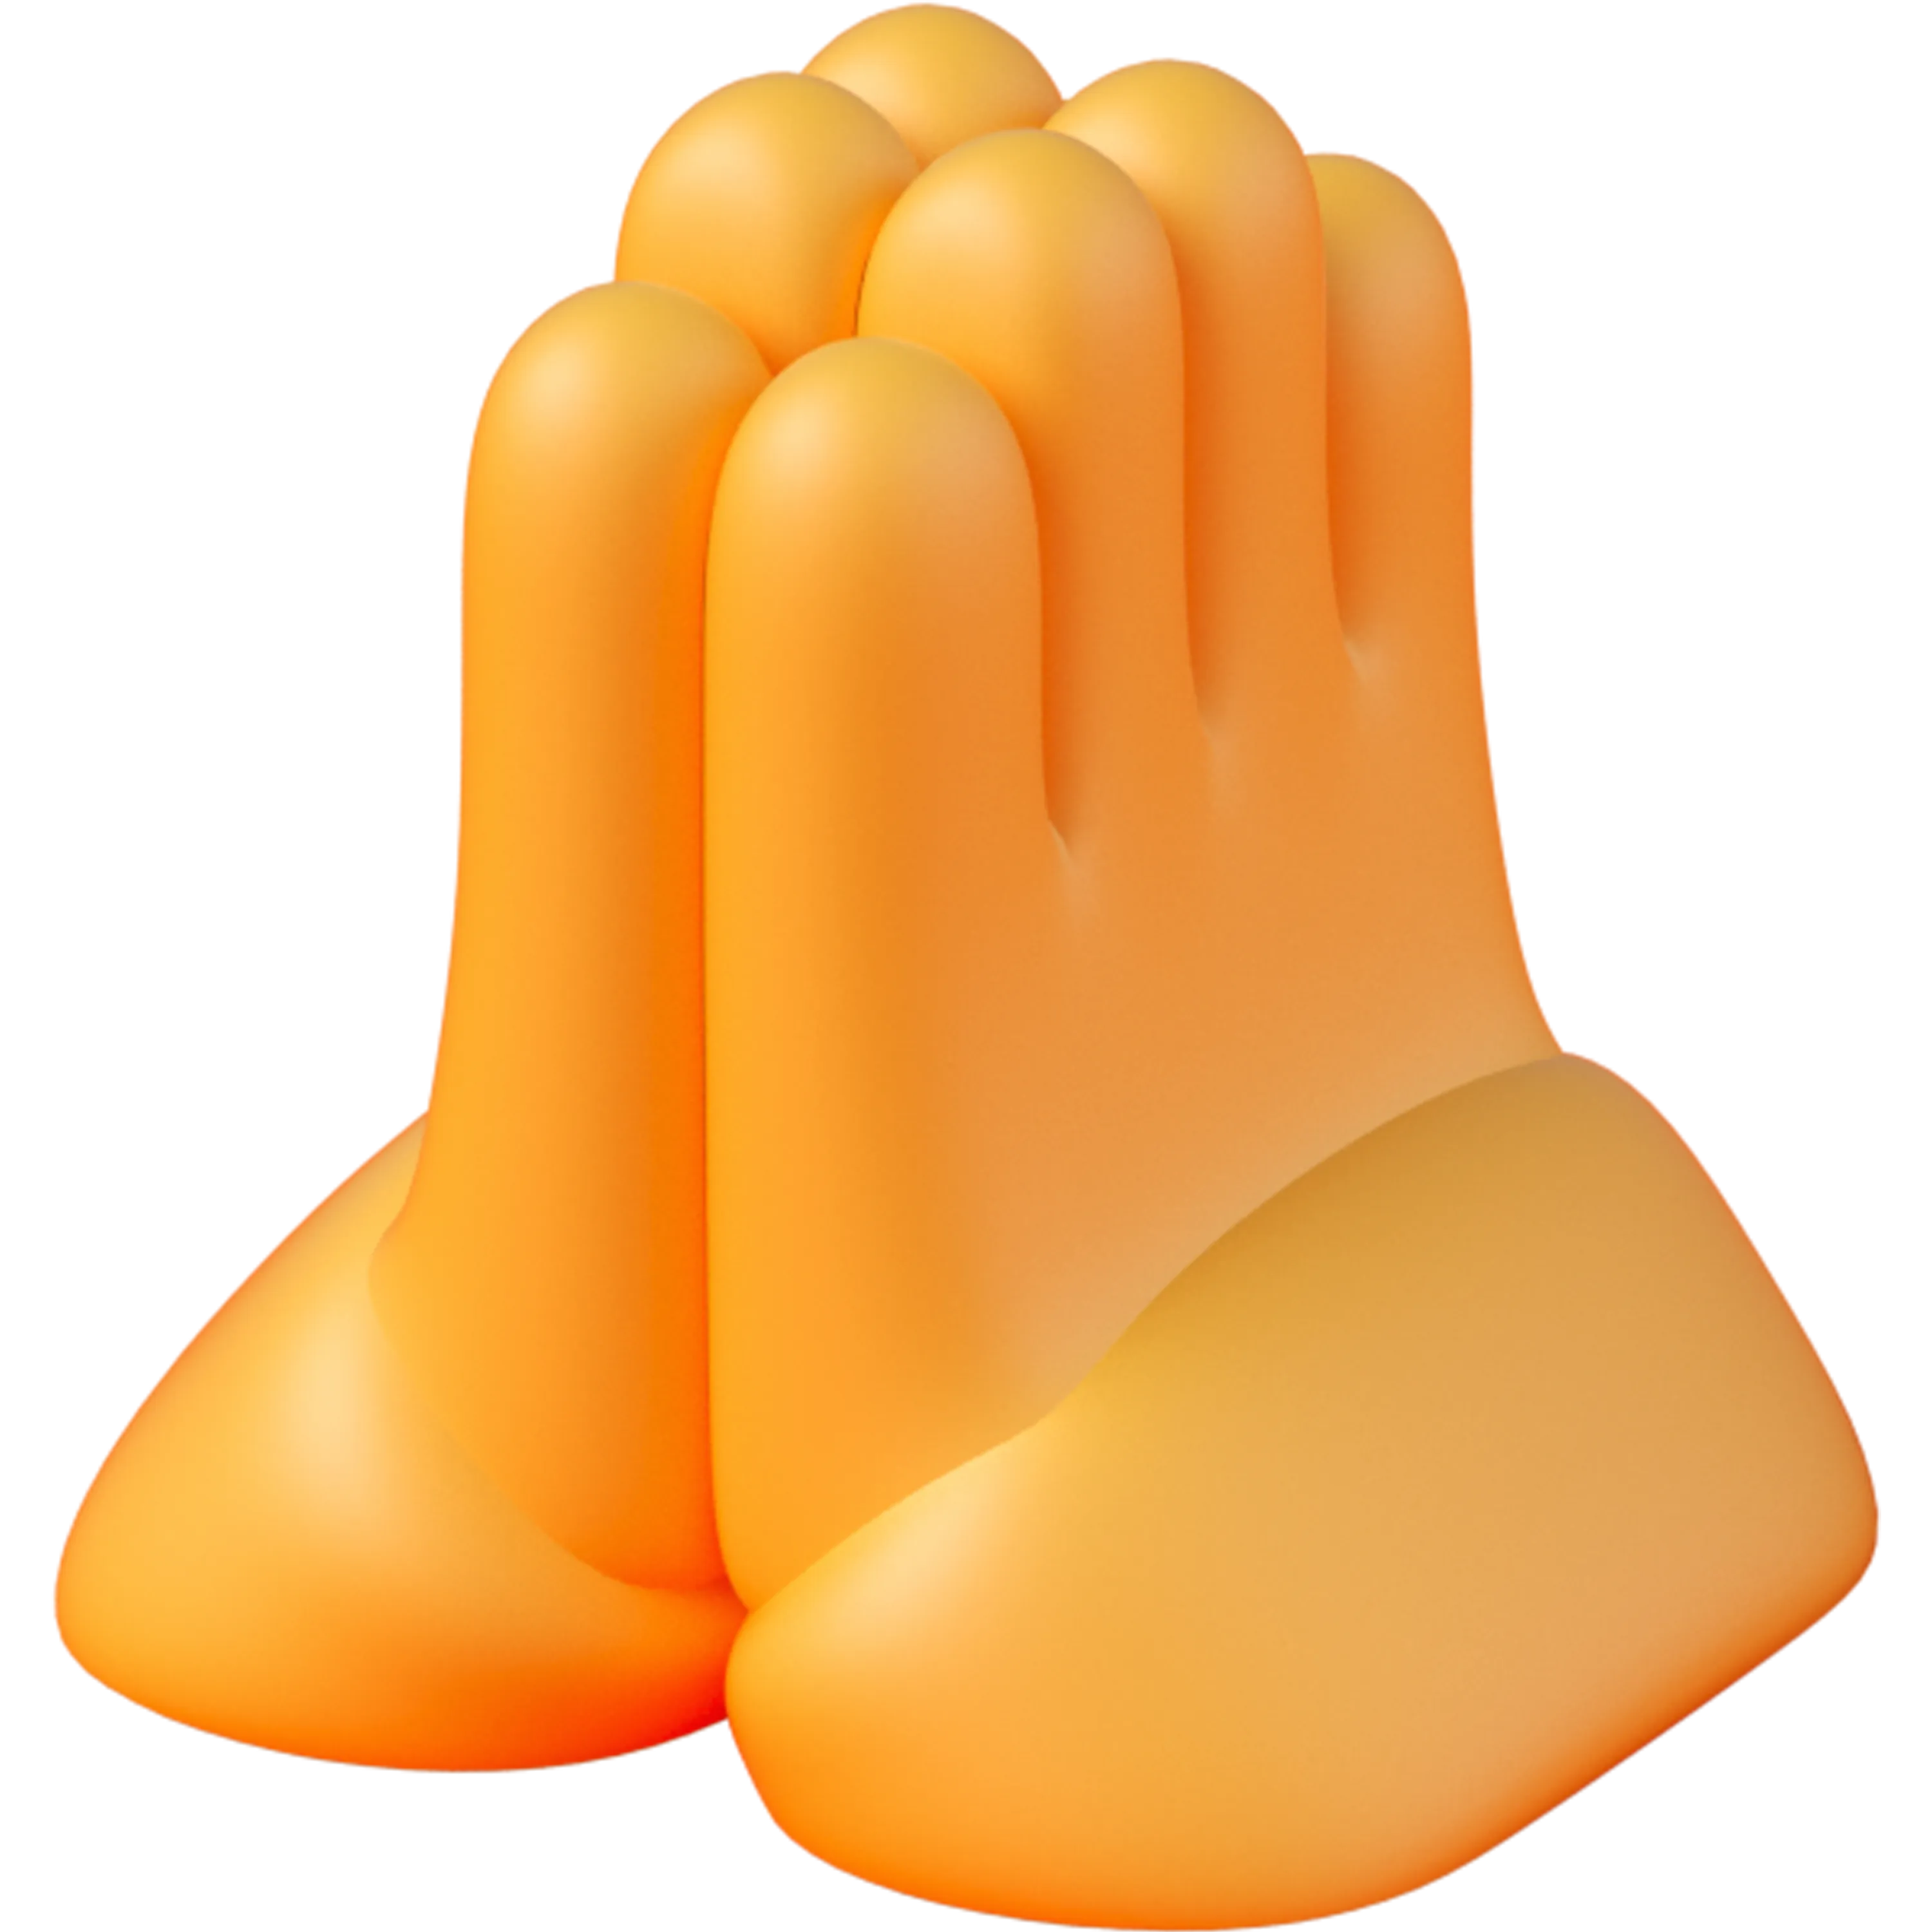 little 3D prayer hands like the emoji